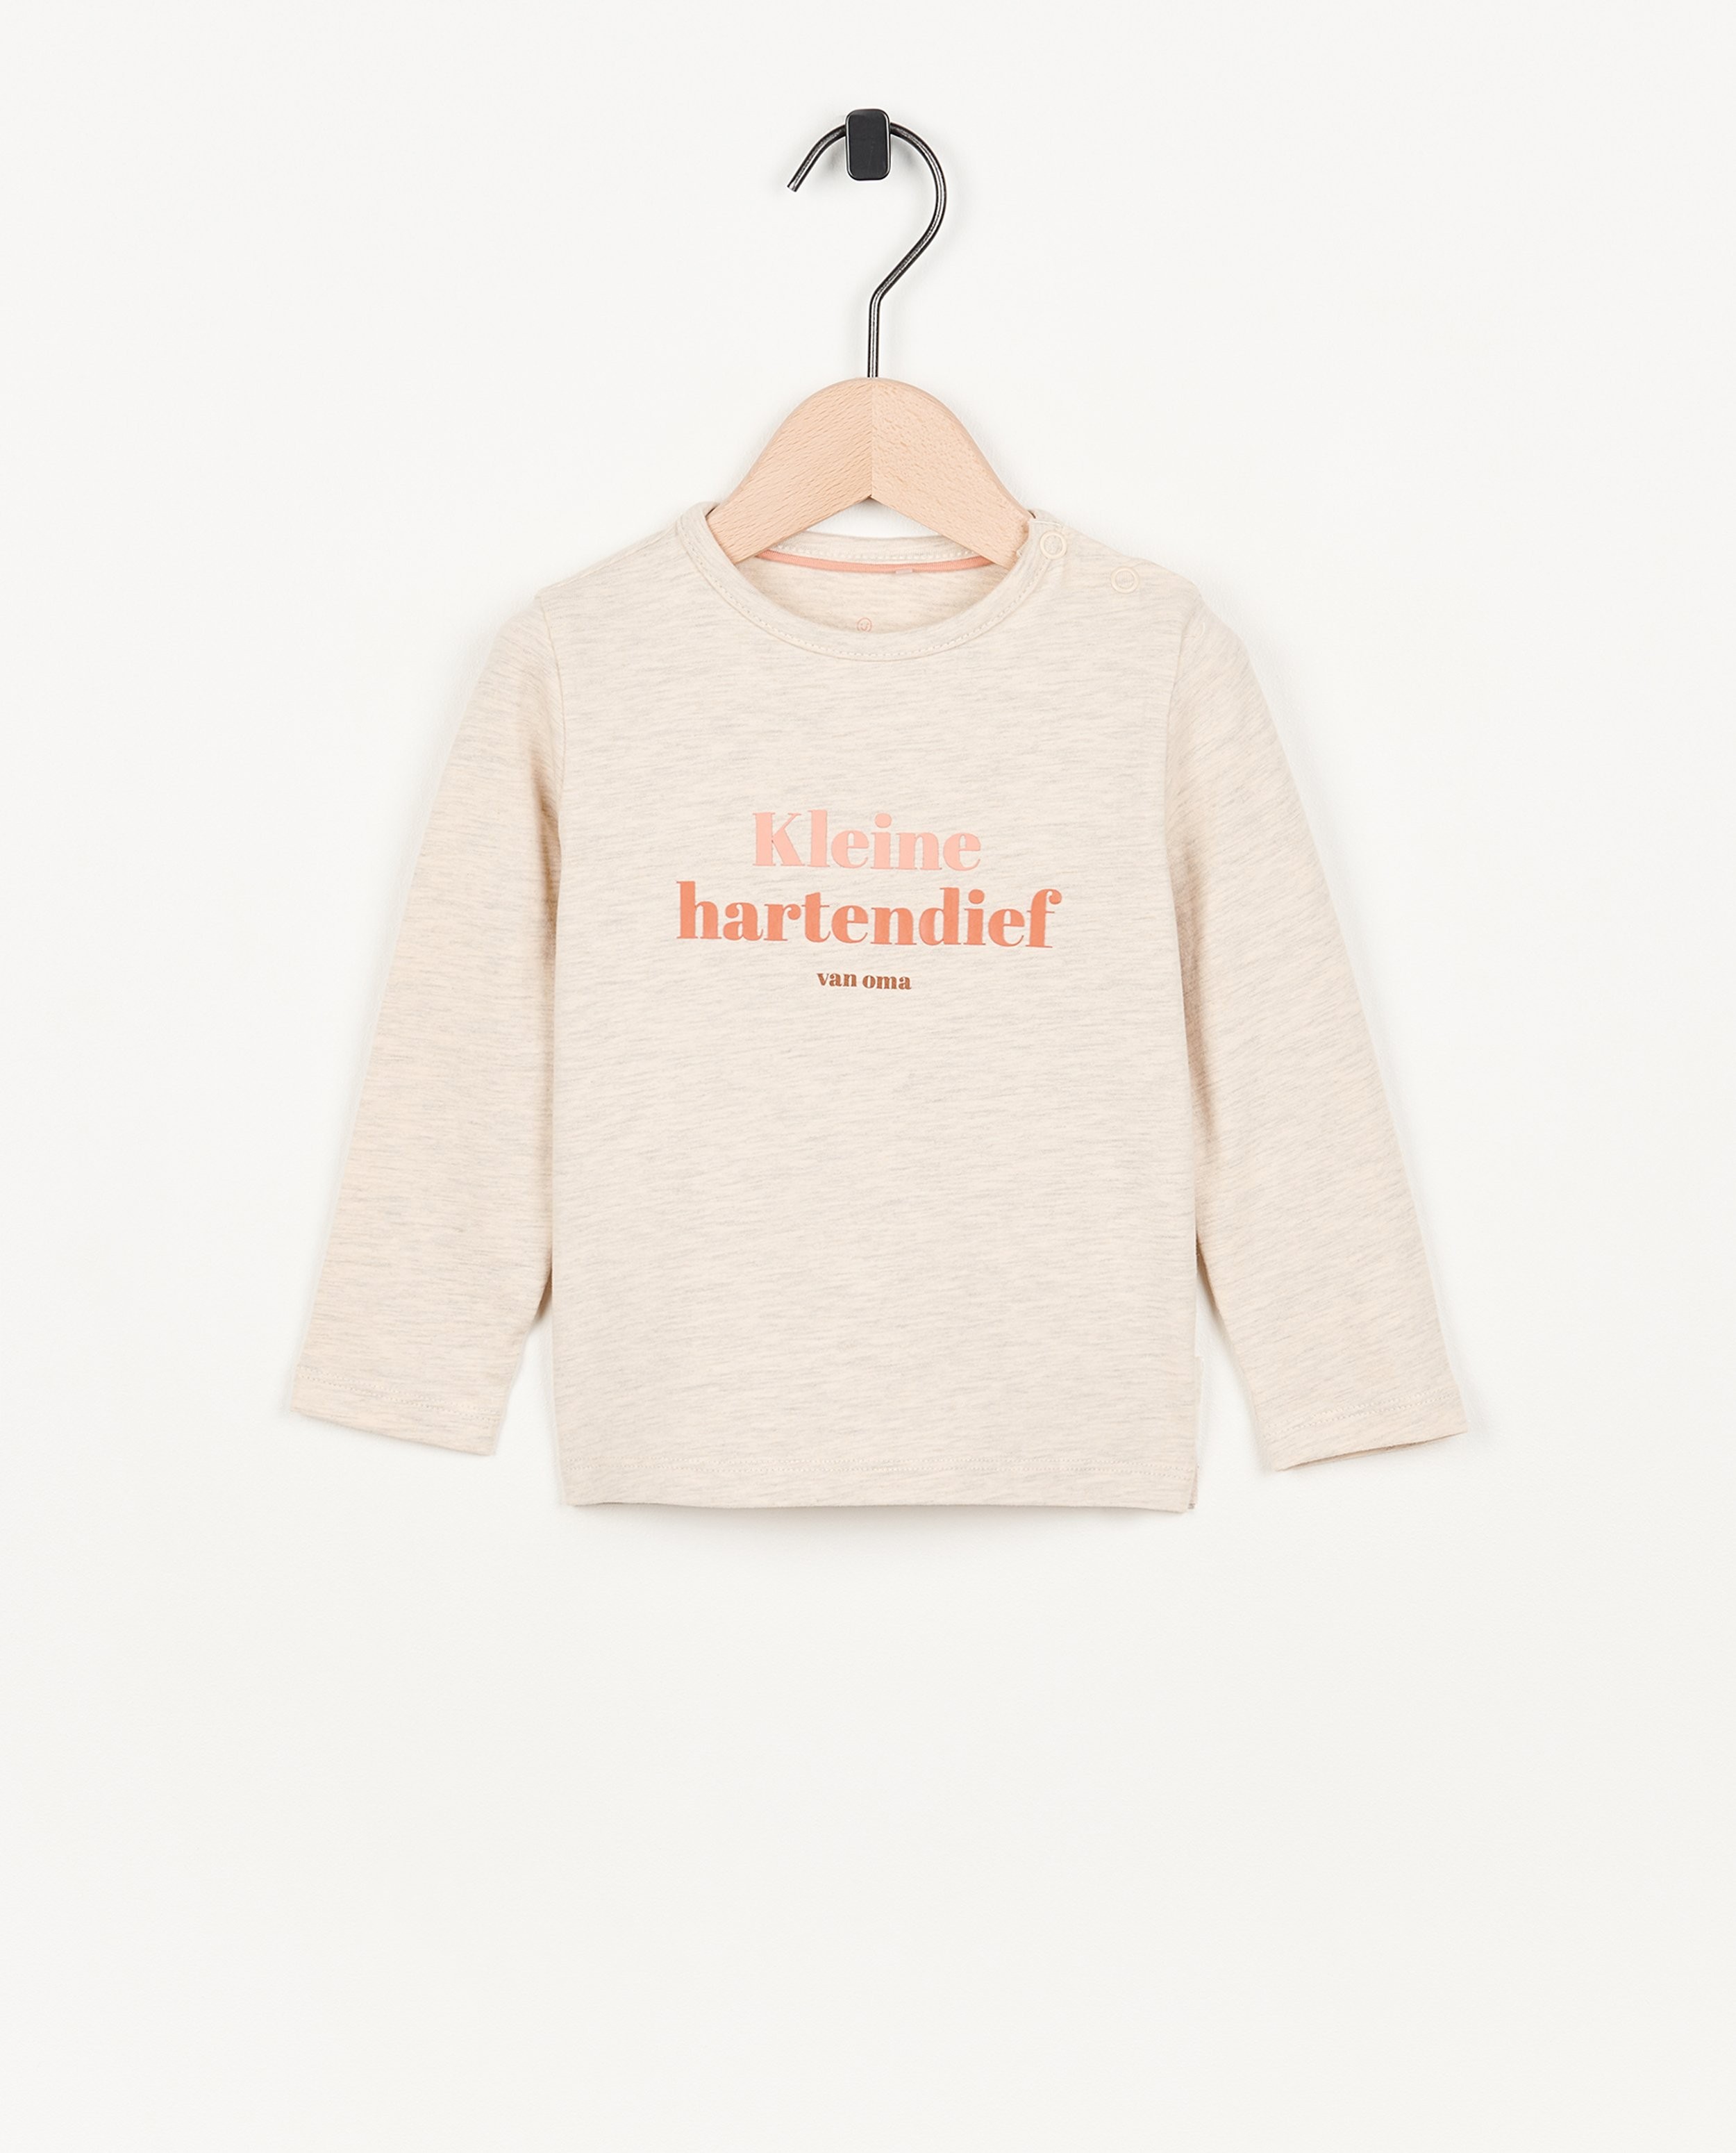 T-shirt à manches longues avec inscription (NL) - null - Cuddles and Smiles